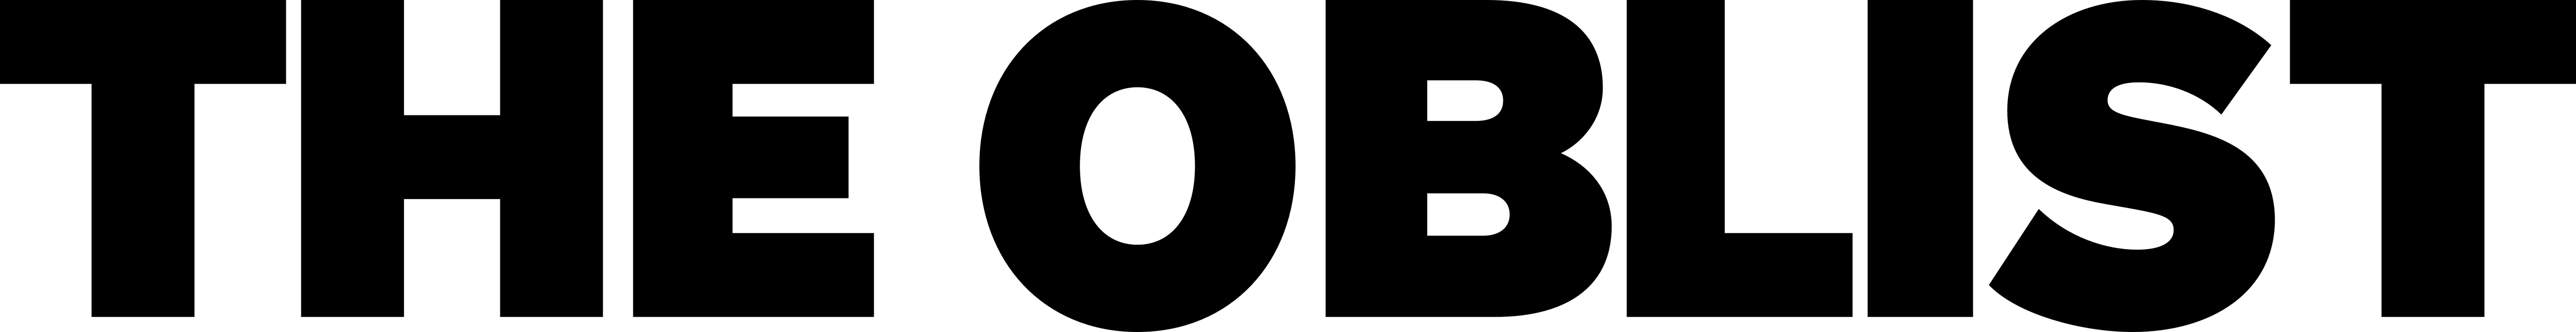 Logo The Oblist black and white version